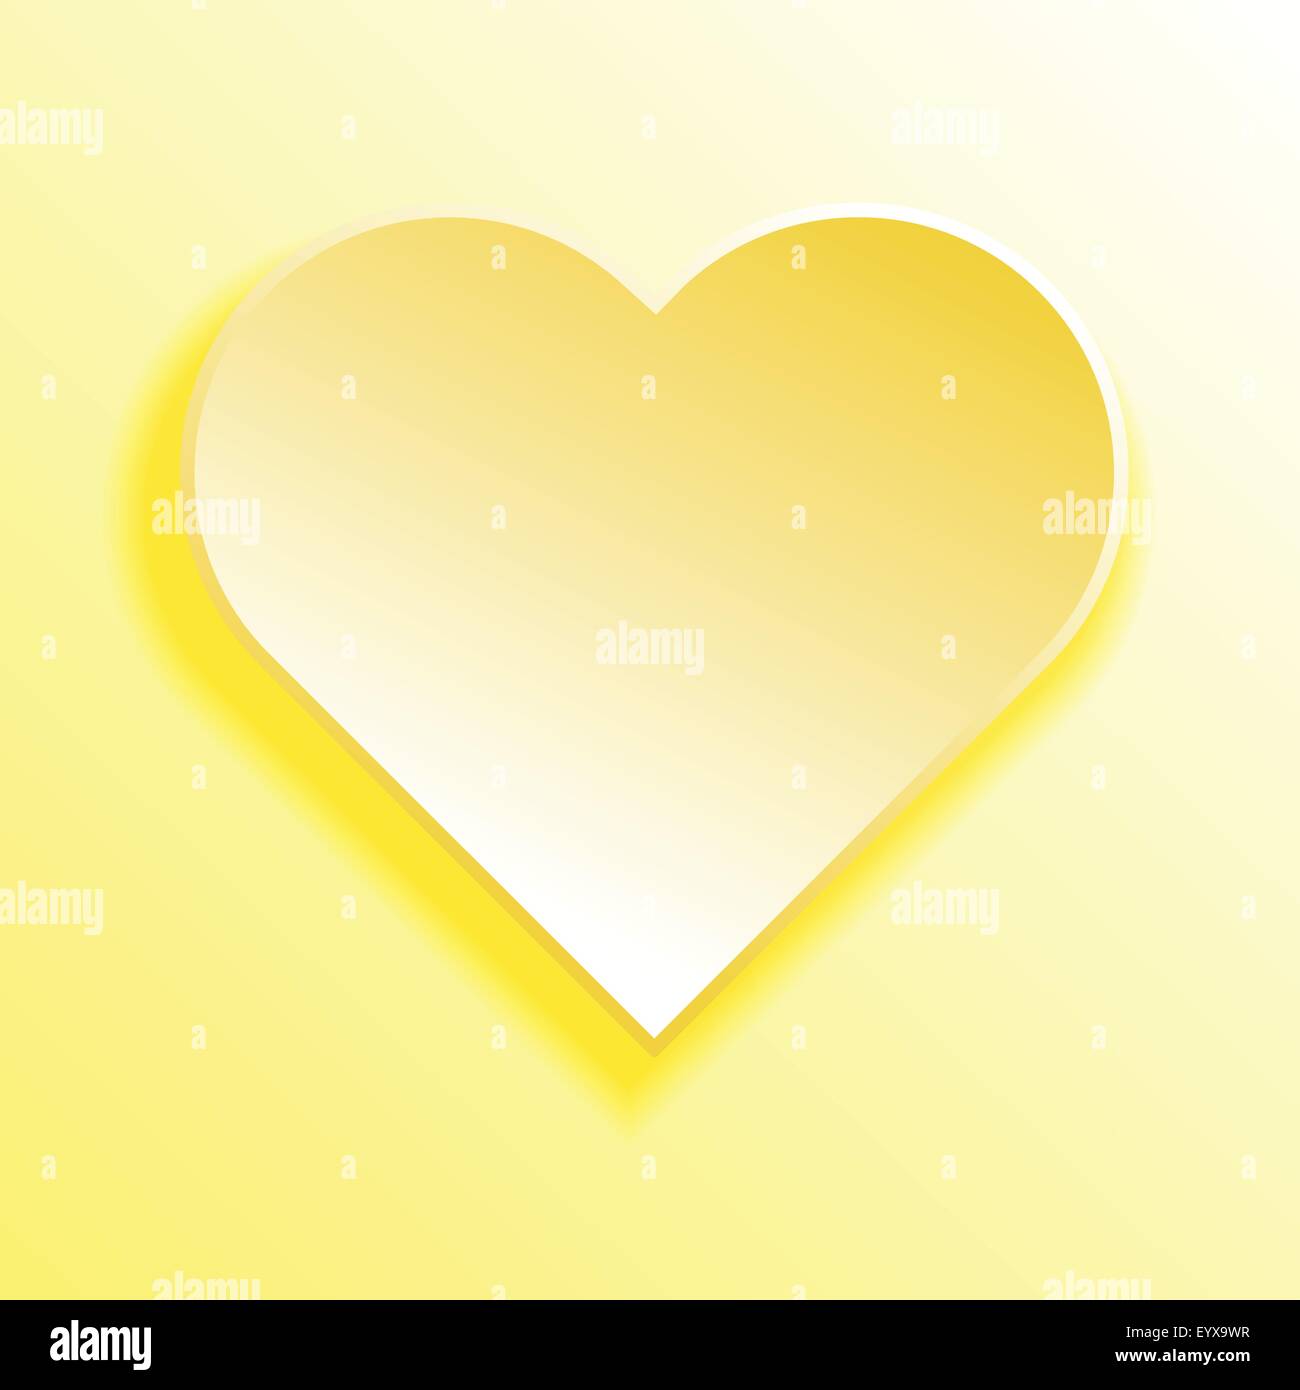 Yellow heart symbol festive card vector illustration. Stock Vector